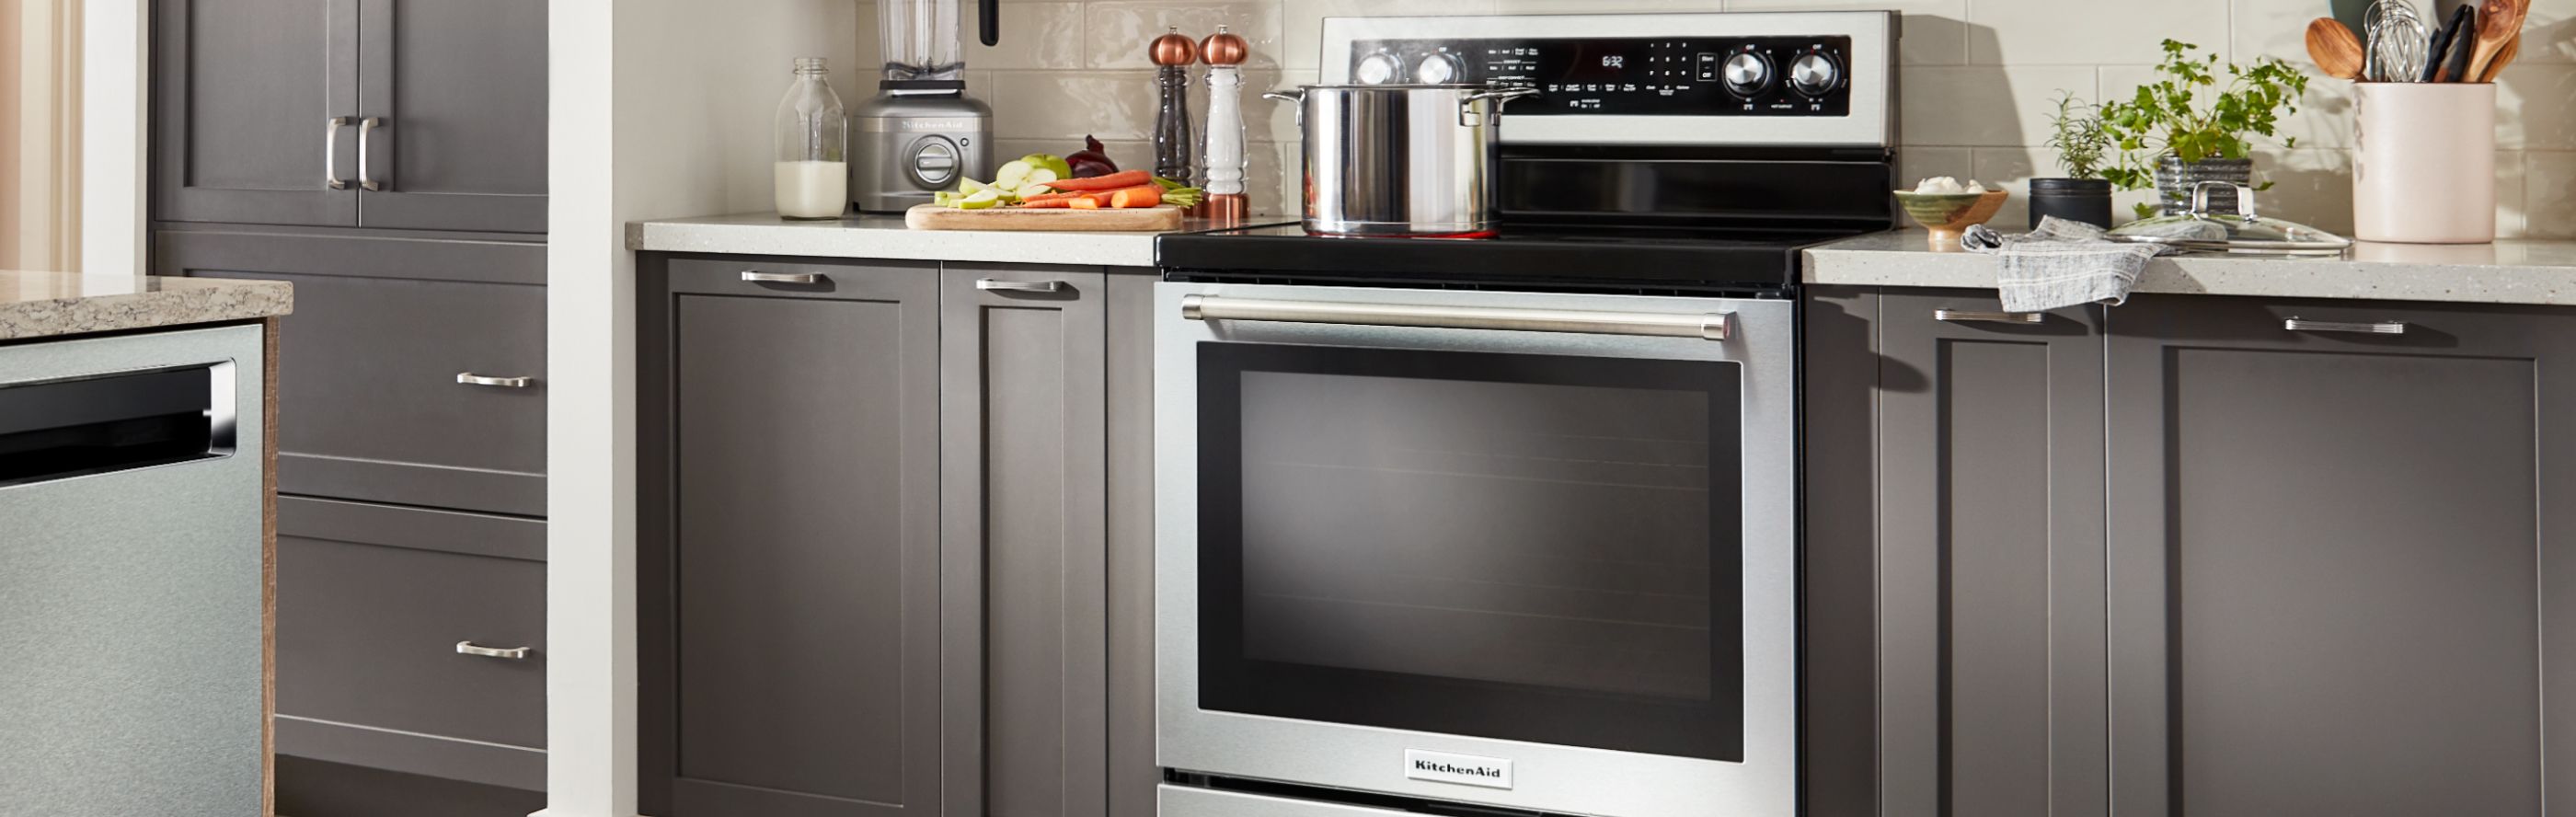 Stainless steel range in a kitchen with dark cabinets